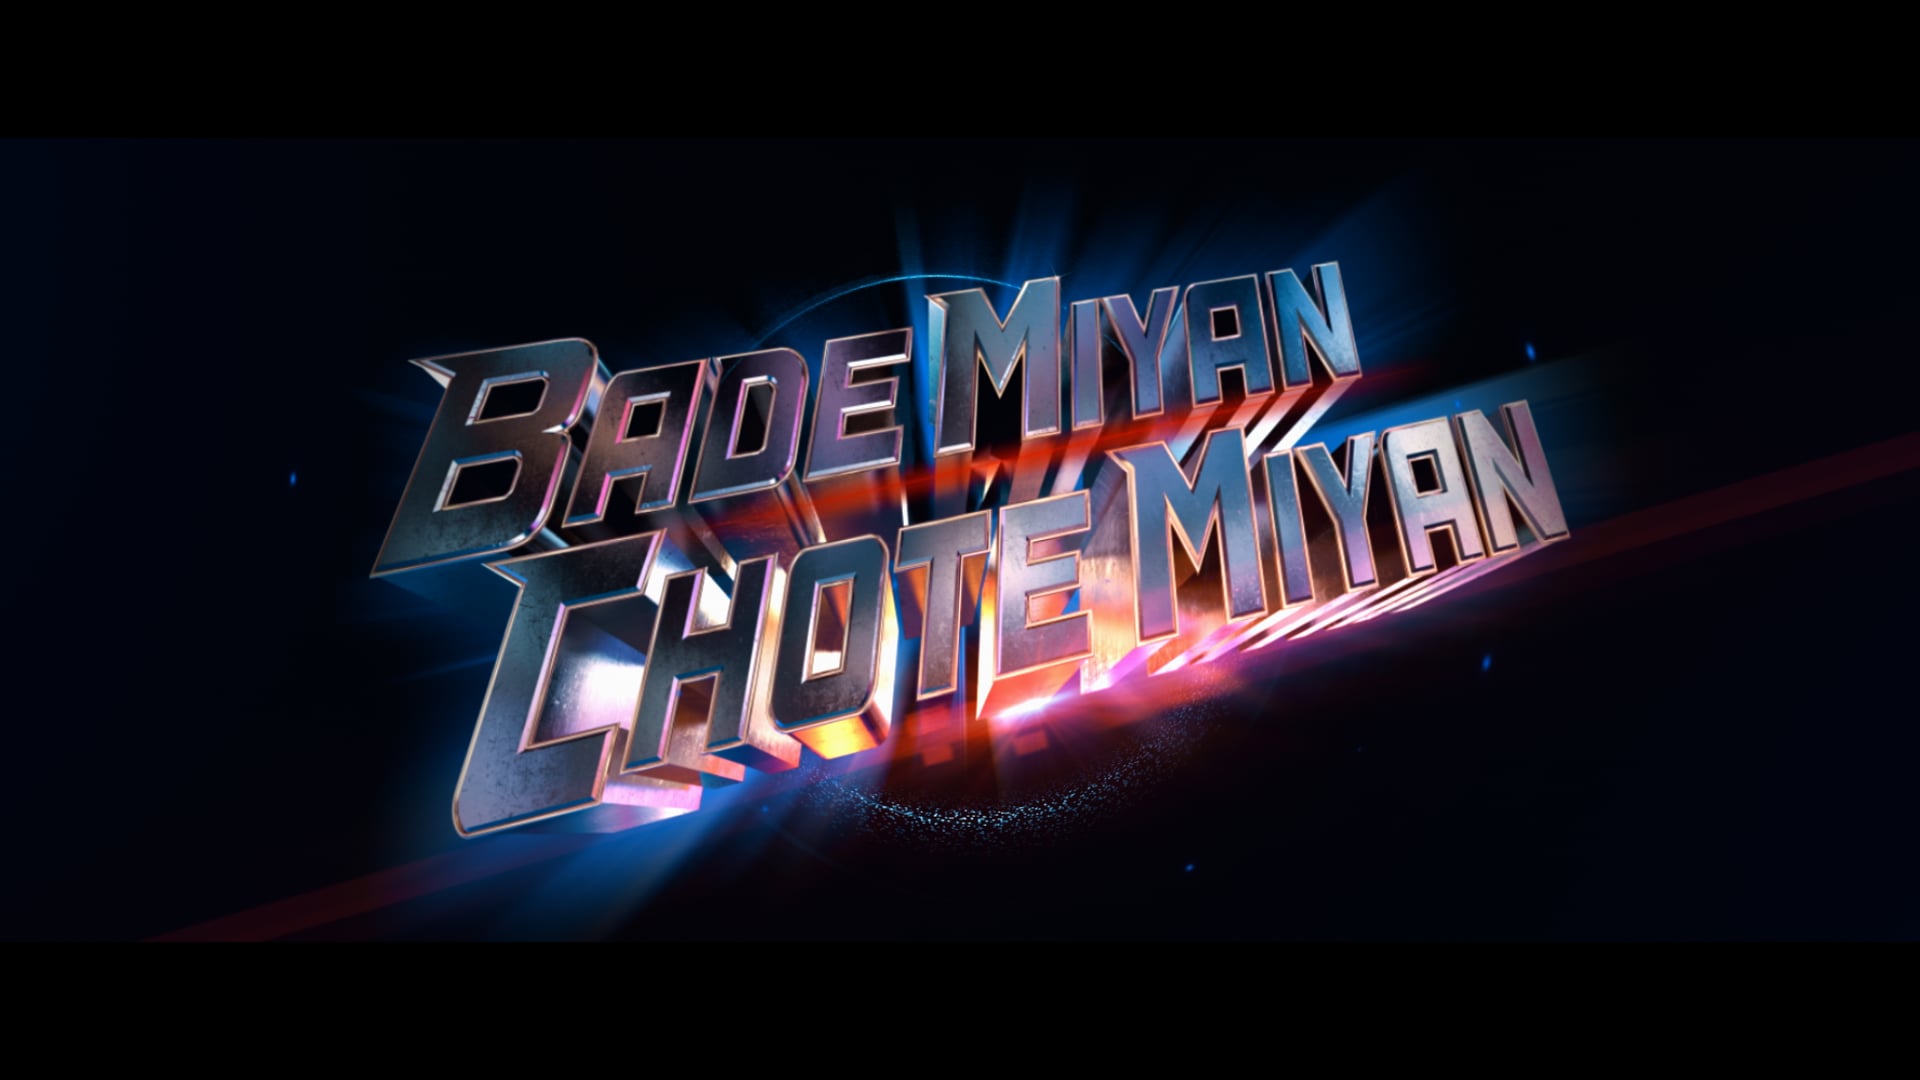 Bade Miyan, Chote Miyan - film announcement.